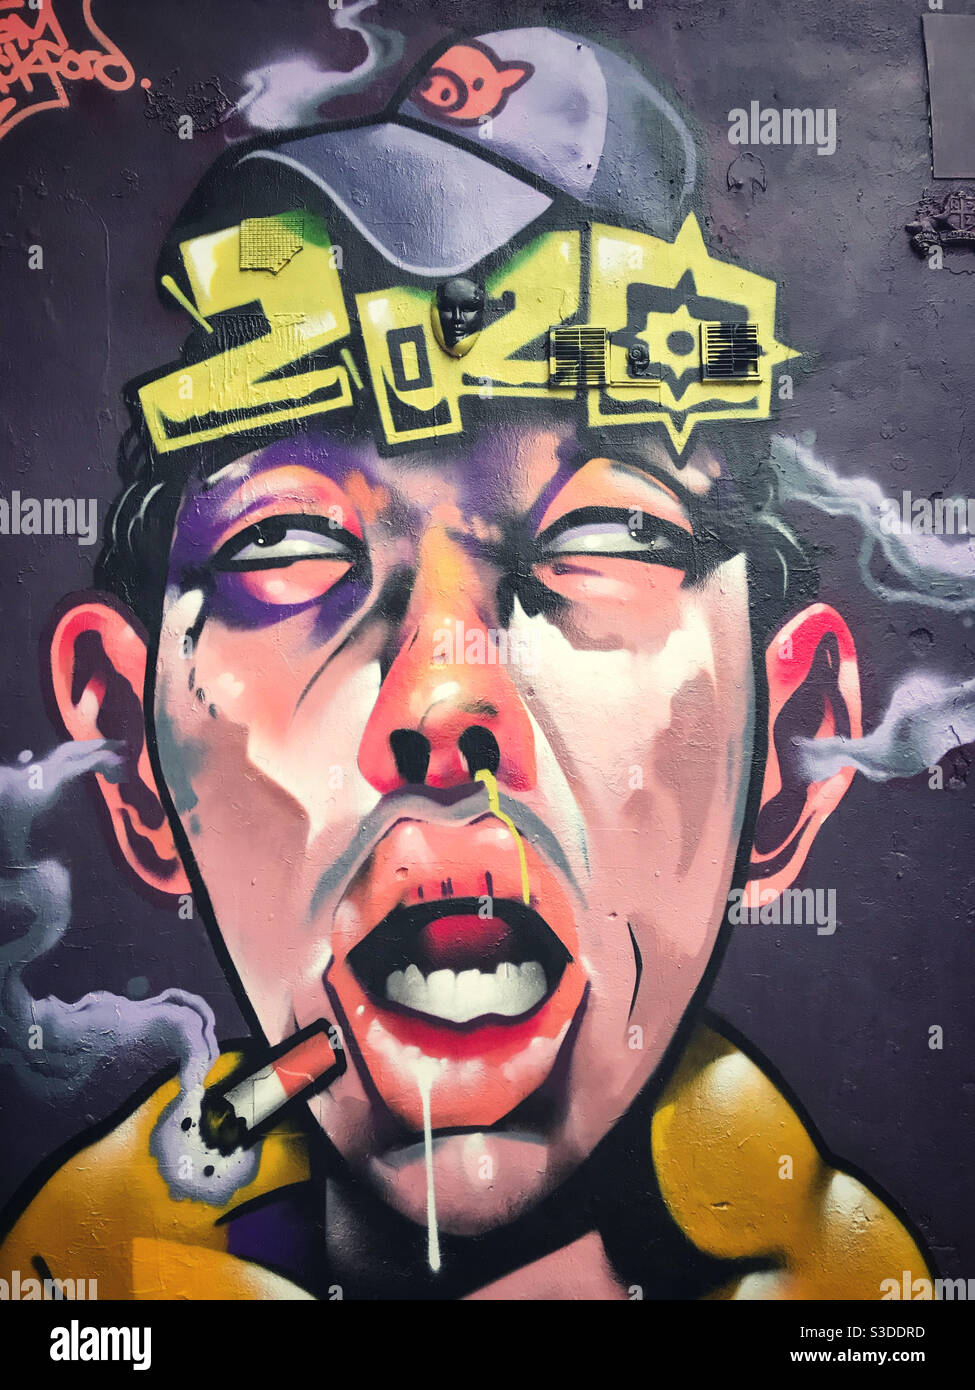 Street Art or Graffiti in Spitalfields, East London Stock Photo